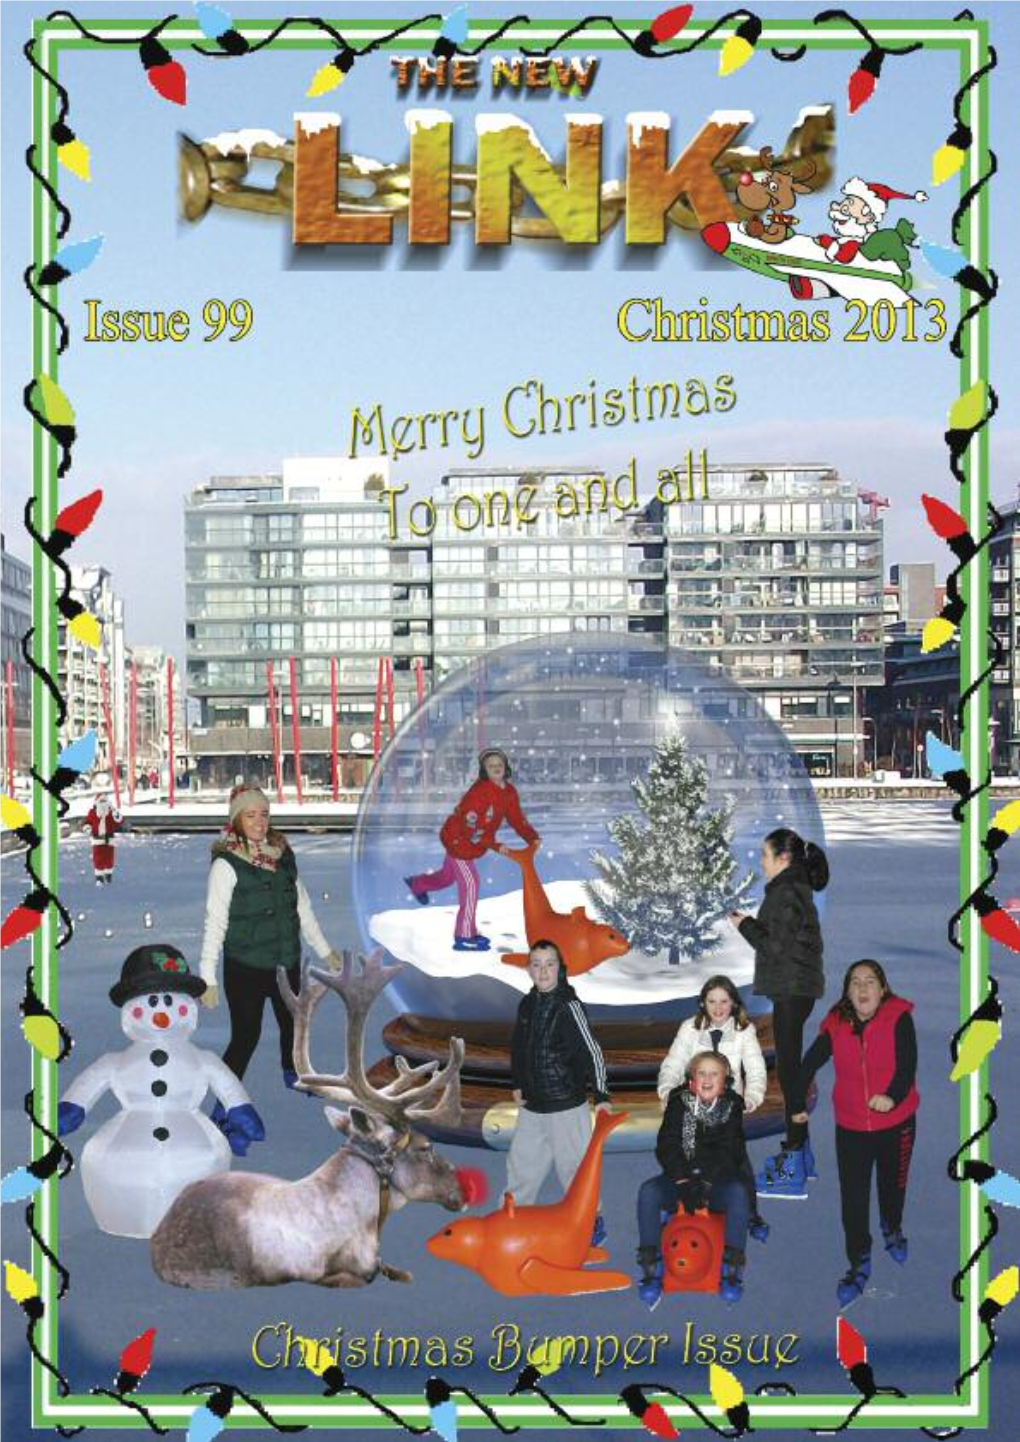 The New Link Christmas 2013